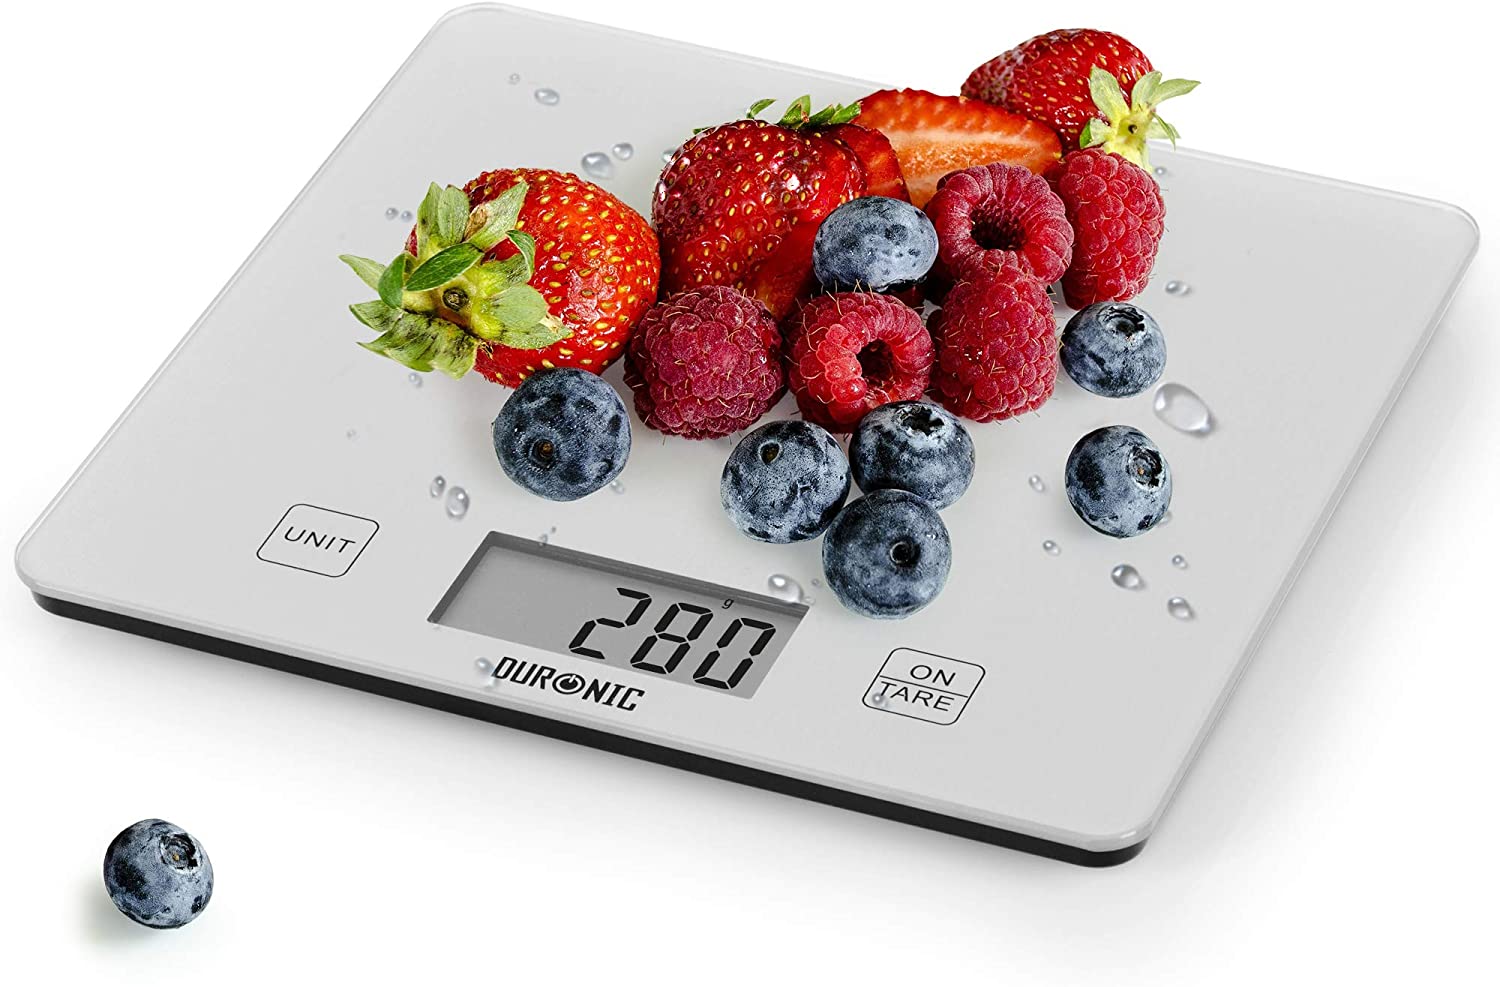 Bilancia cucina digitale 20kg divisione 1 gr, MOR.109788, display LCD extra  large, alimentatore incluso, 28x30x11h CM